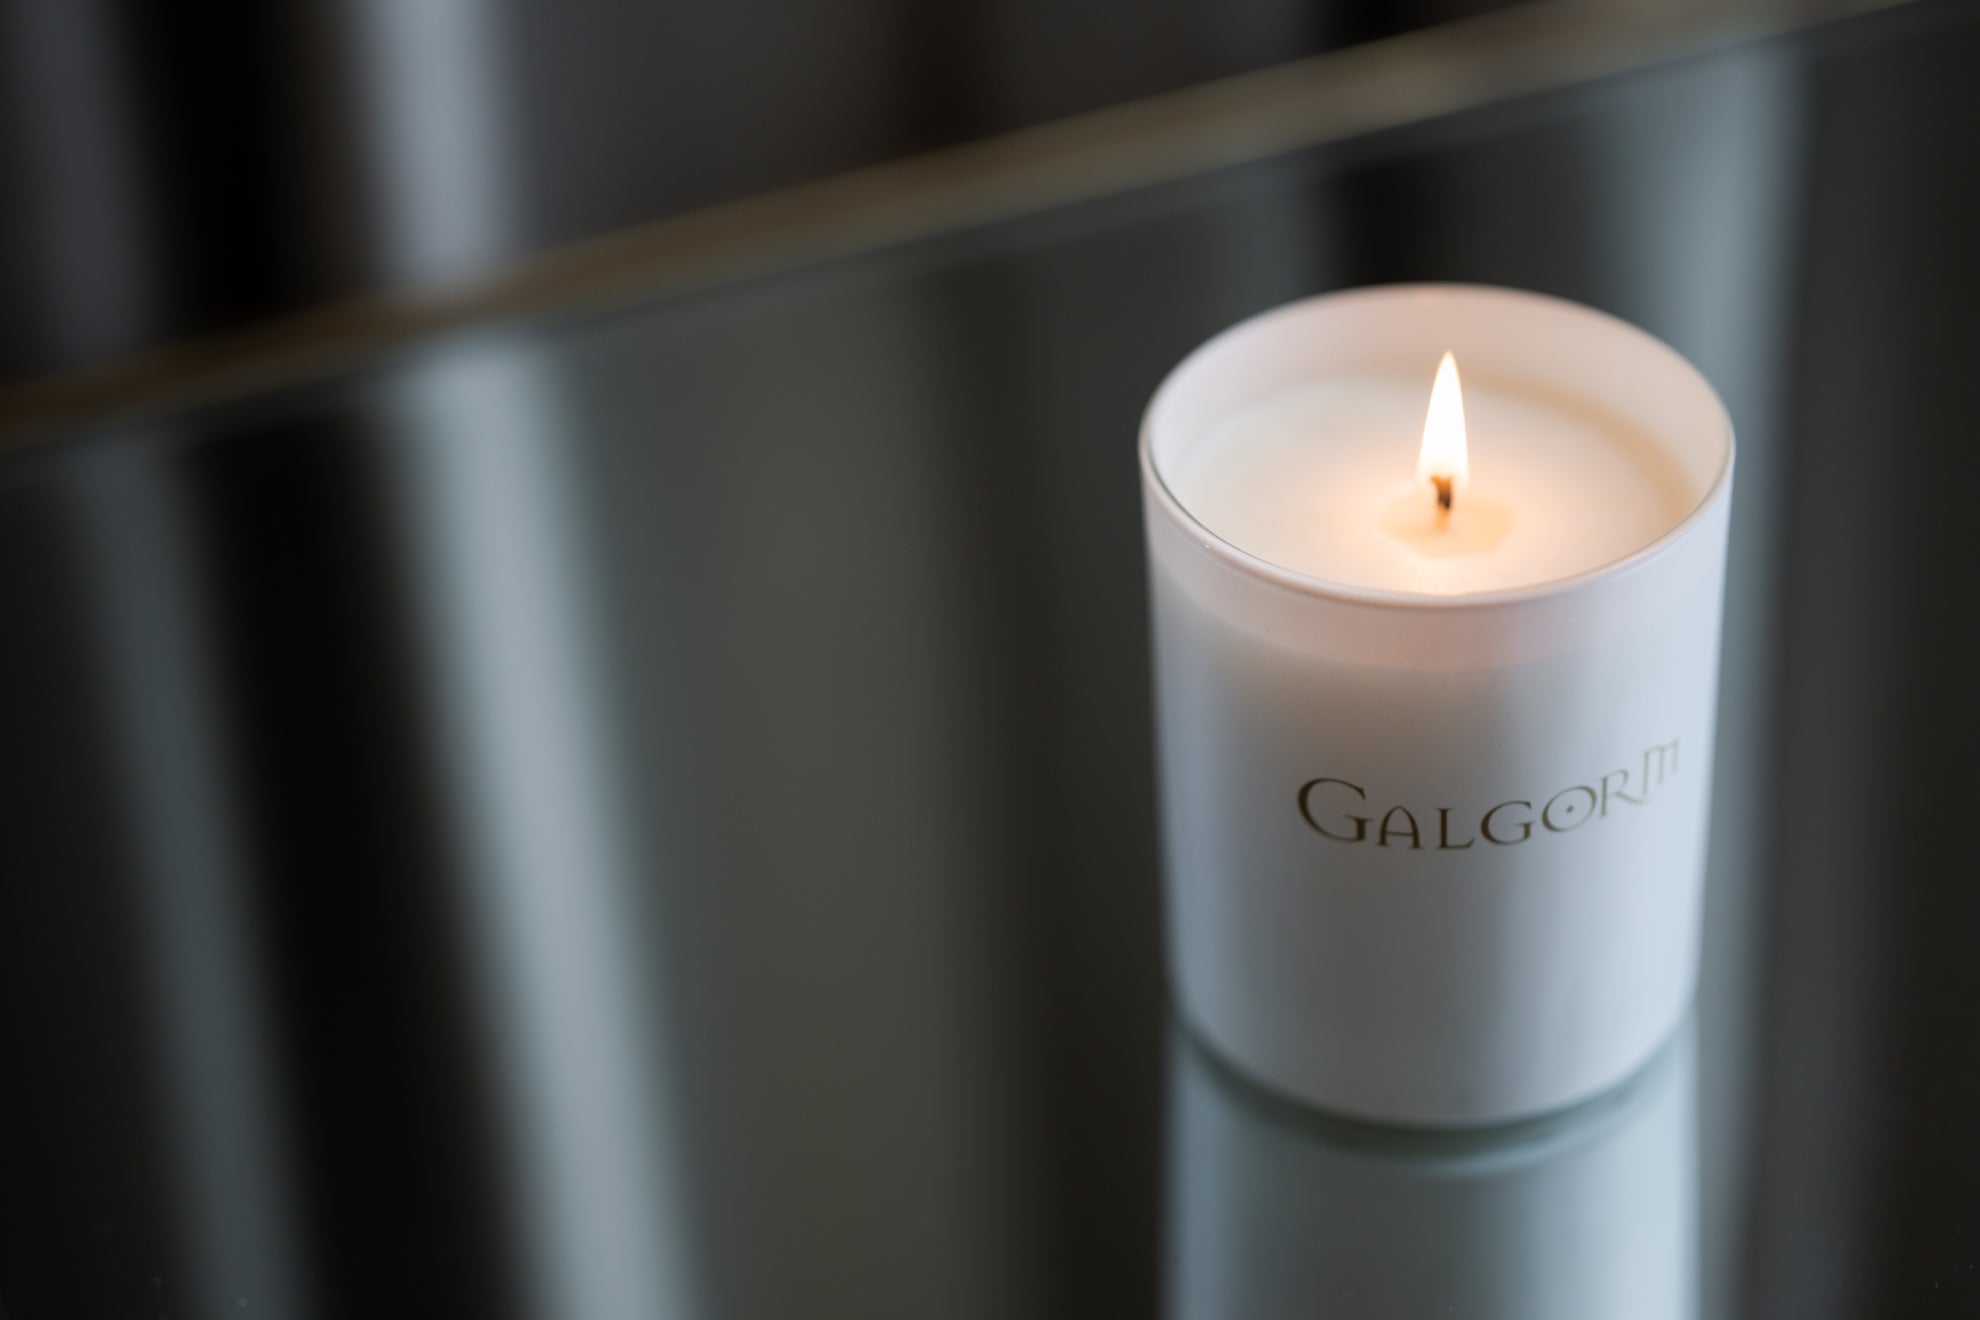 Galgorm Candle